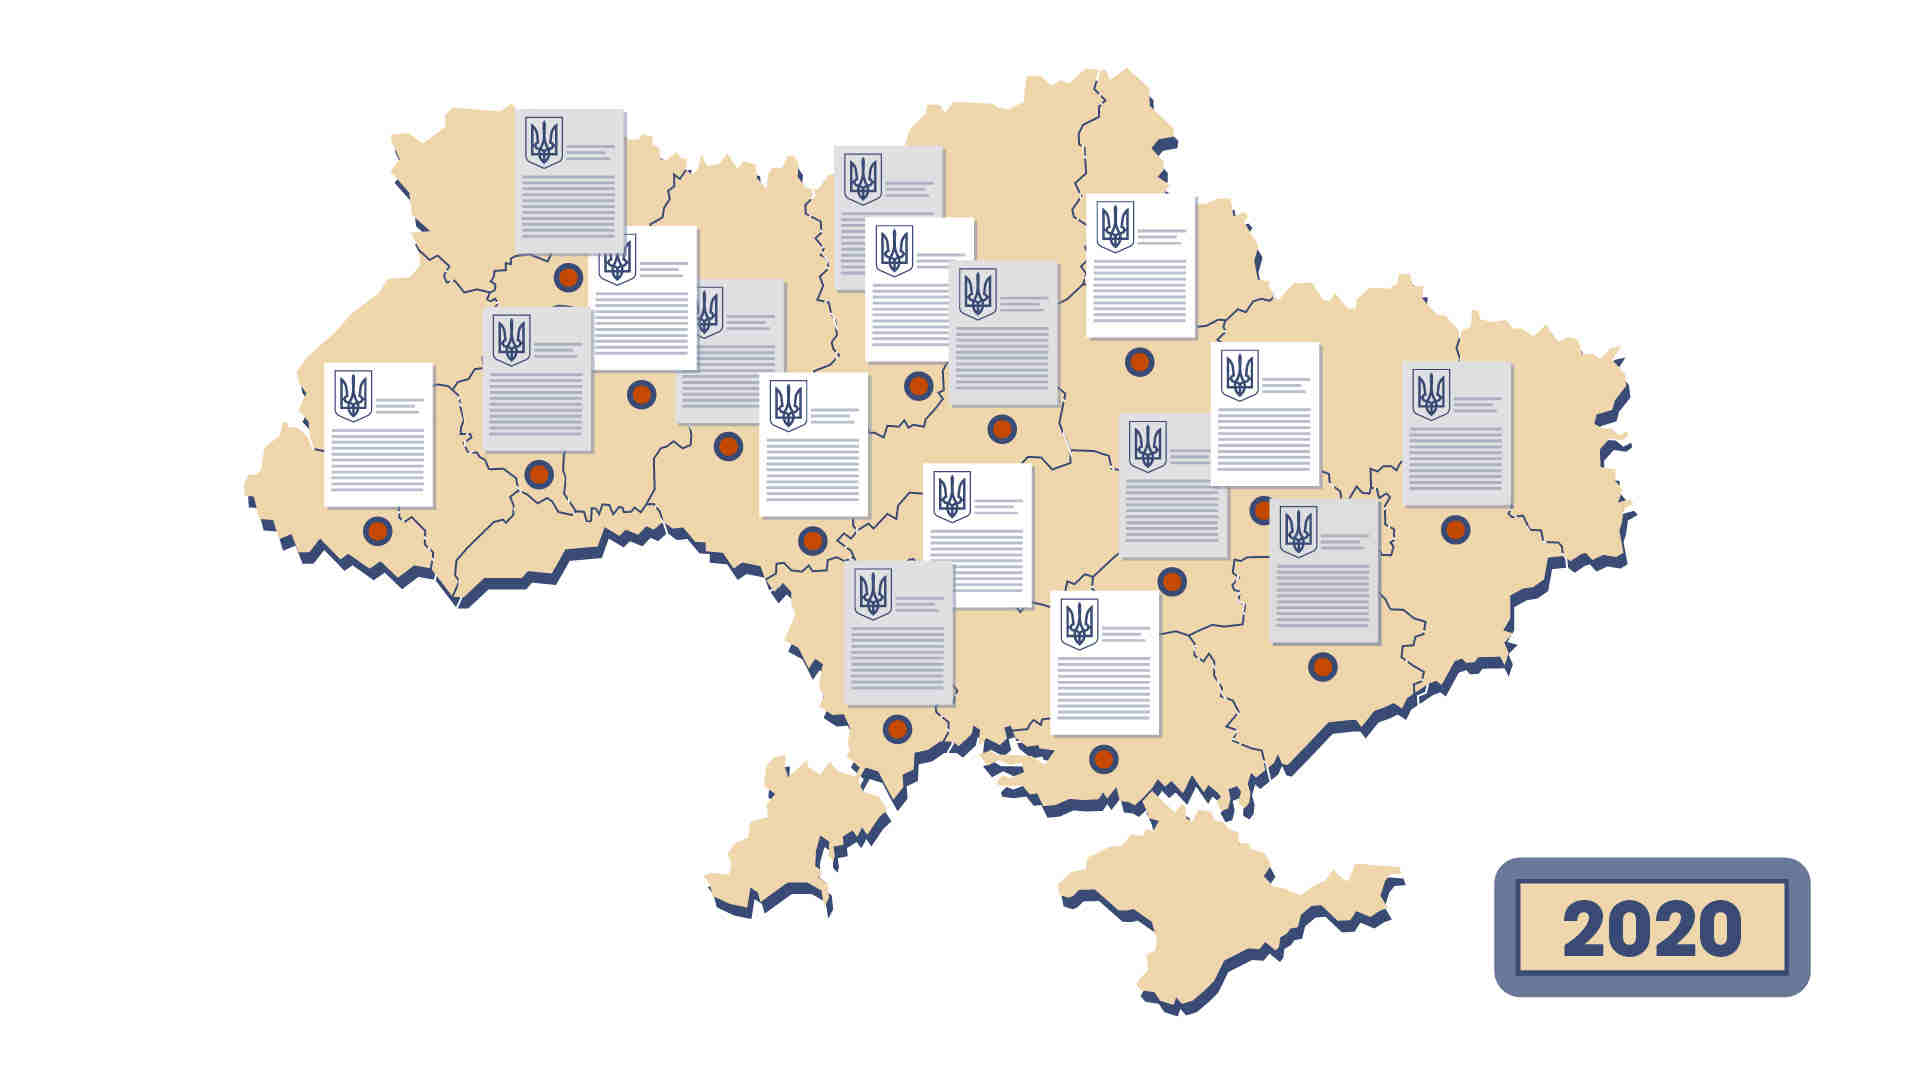 Map of Ukraine 2020 - 2D Animated Video